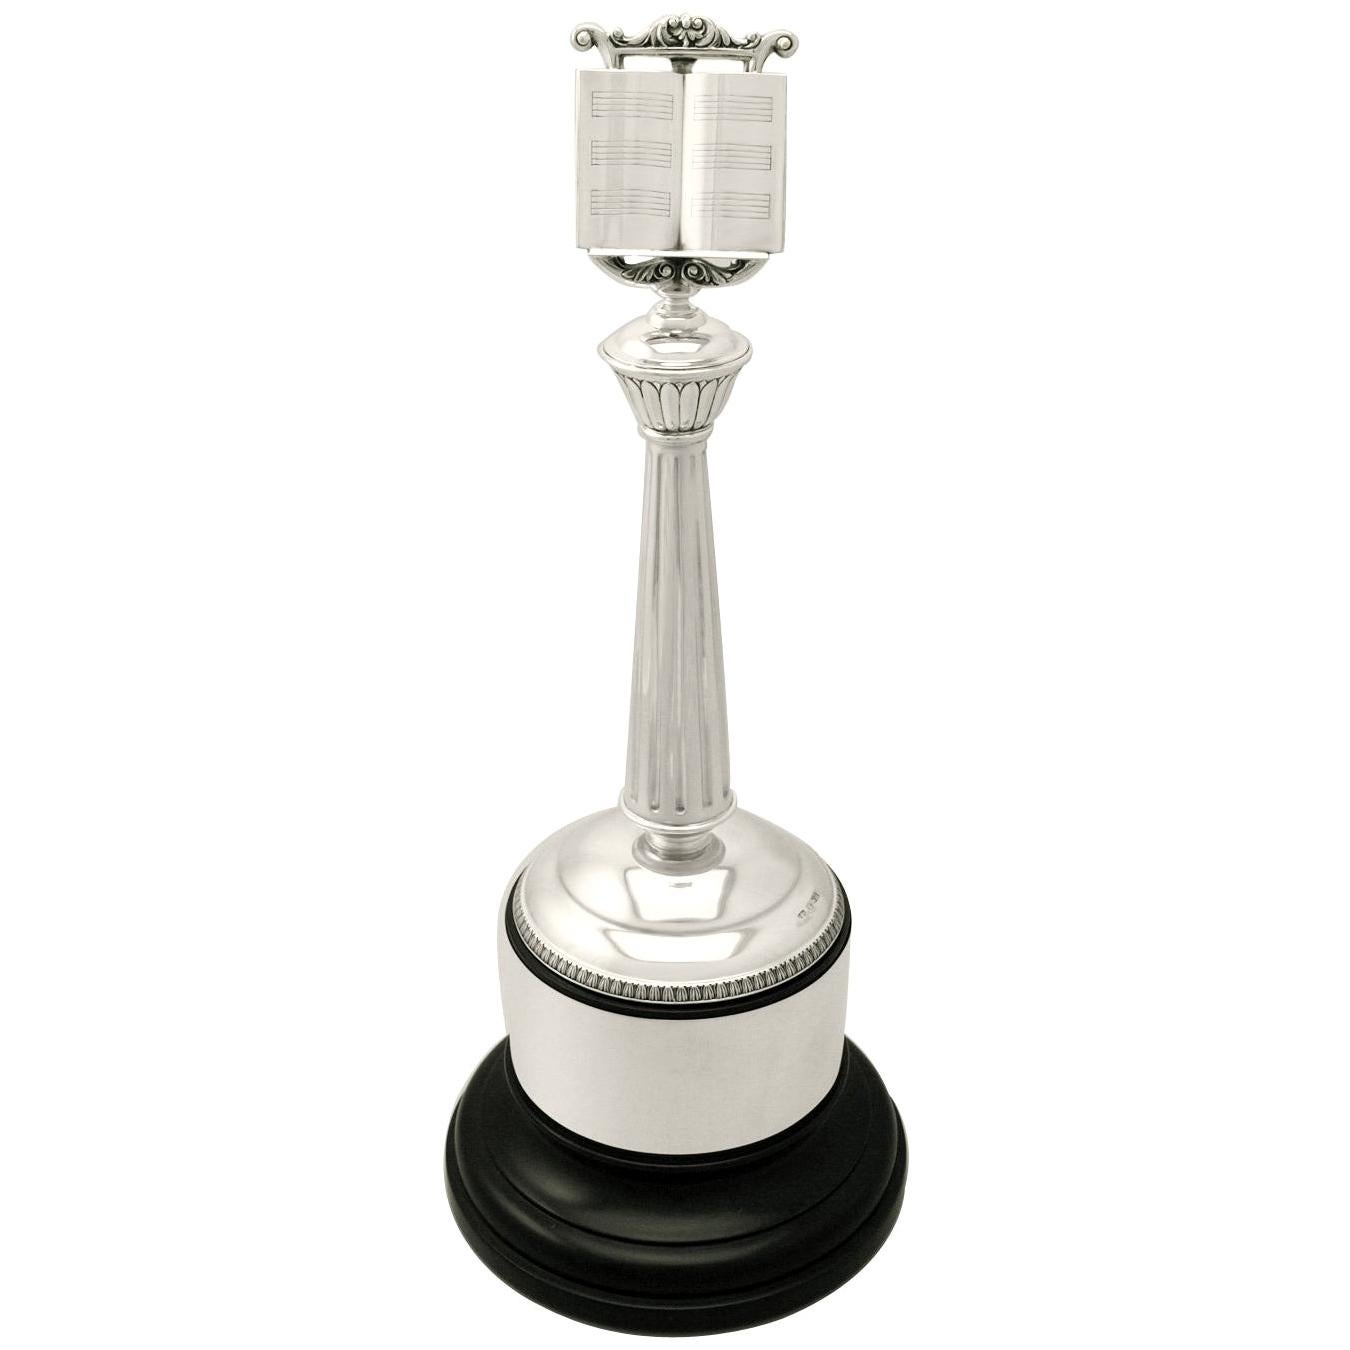 Sterling Silver Music Stand Trophy, Vintage George VI